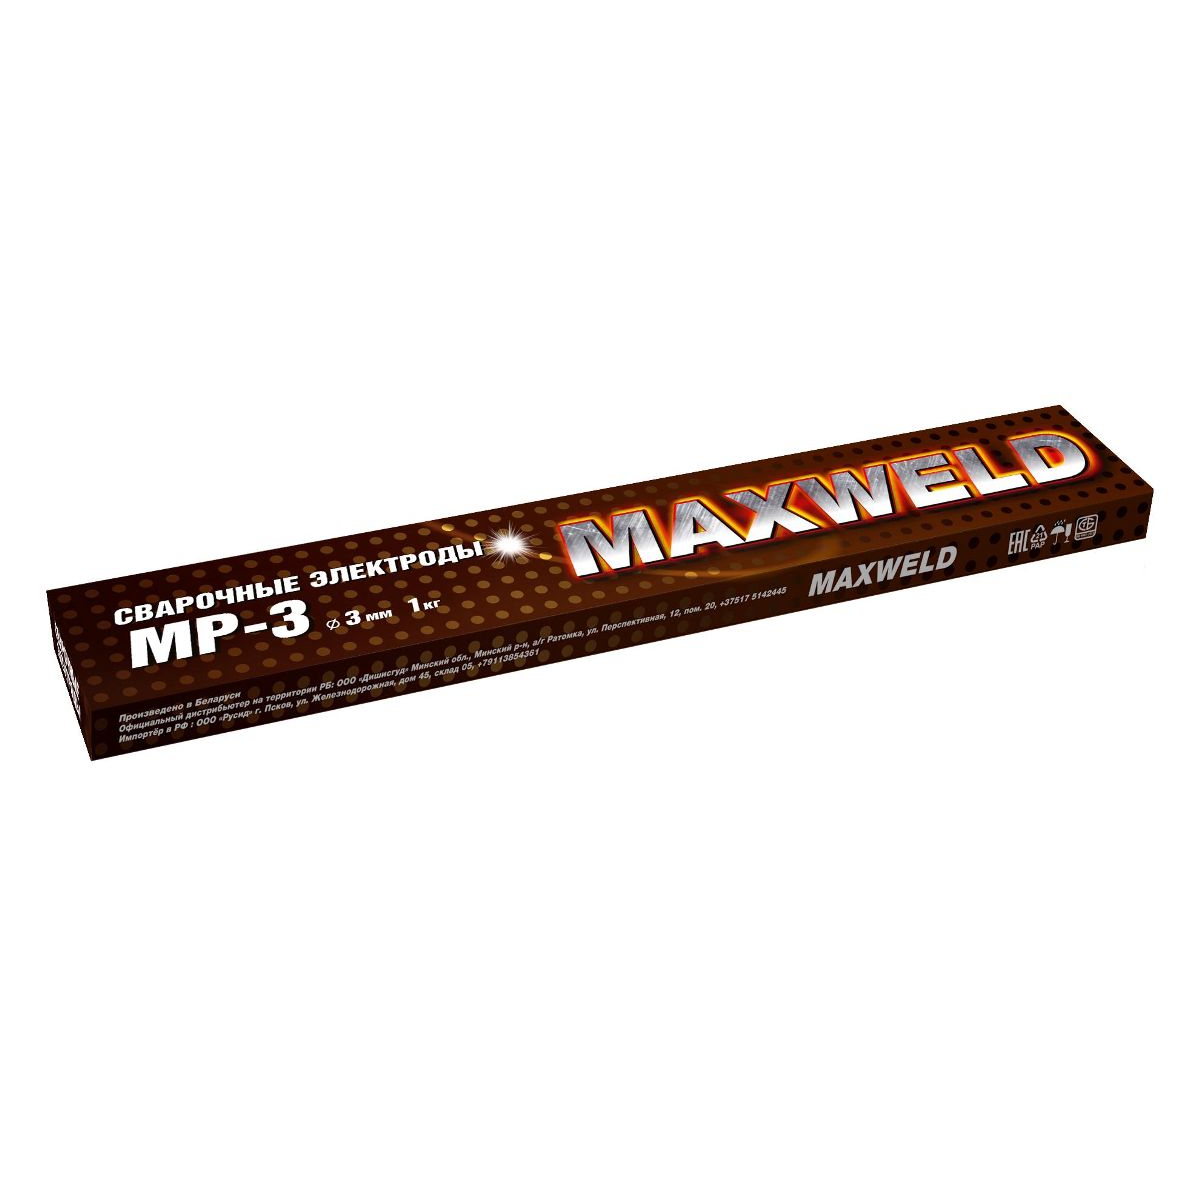 электроды maxweld сталь мр 3 4мм 1 кг Электроды Maxweld СТАЛЬ МР-3 3мм, 1 кг